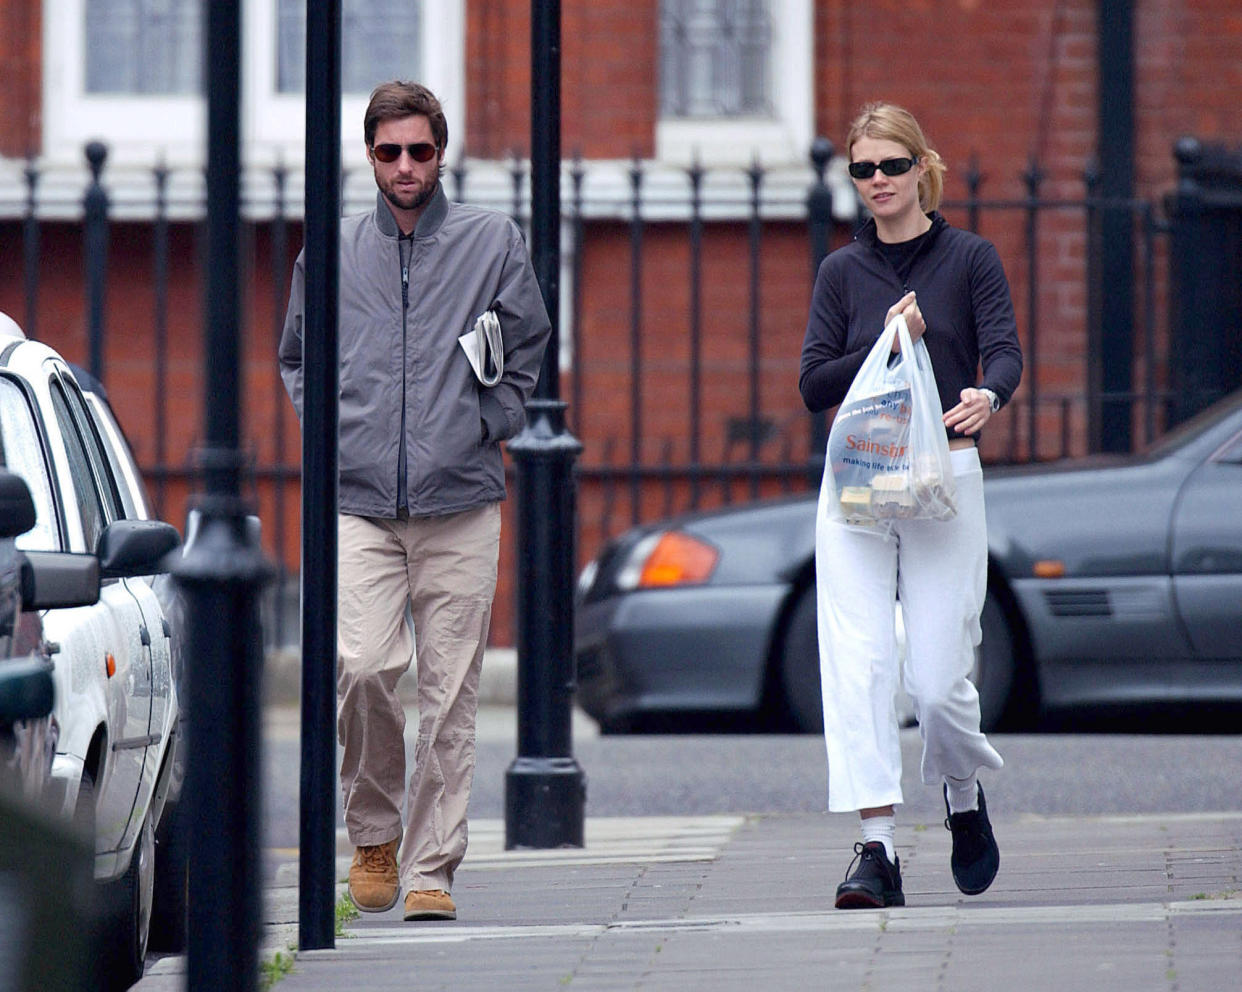 Gwyneth Paltrow & Luke Wilson Shopping At A Supermarket Near Her Home In West London. (Photo by Antony Jones/UK Press via Getty Images)